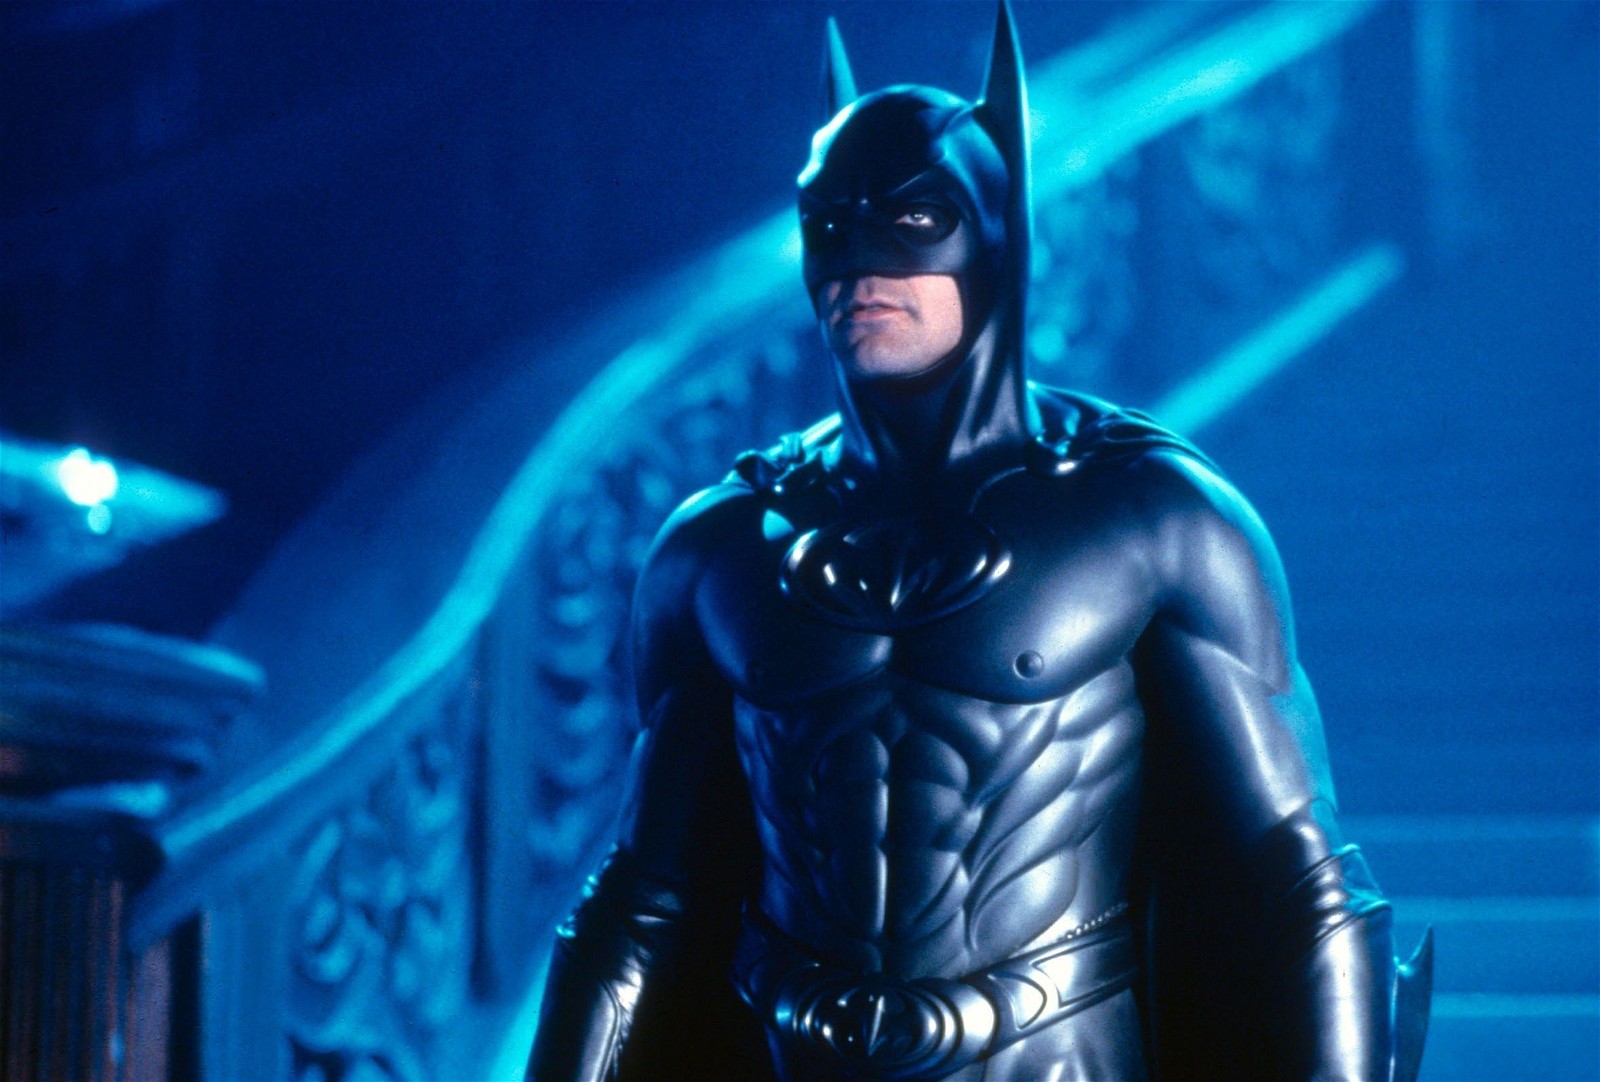 George Clooney as Batman in Batman and Robin (1997).